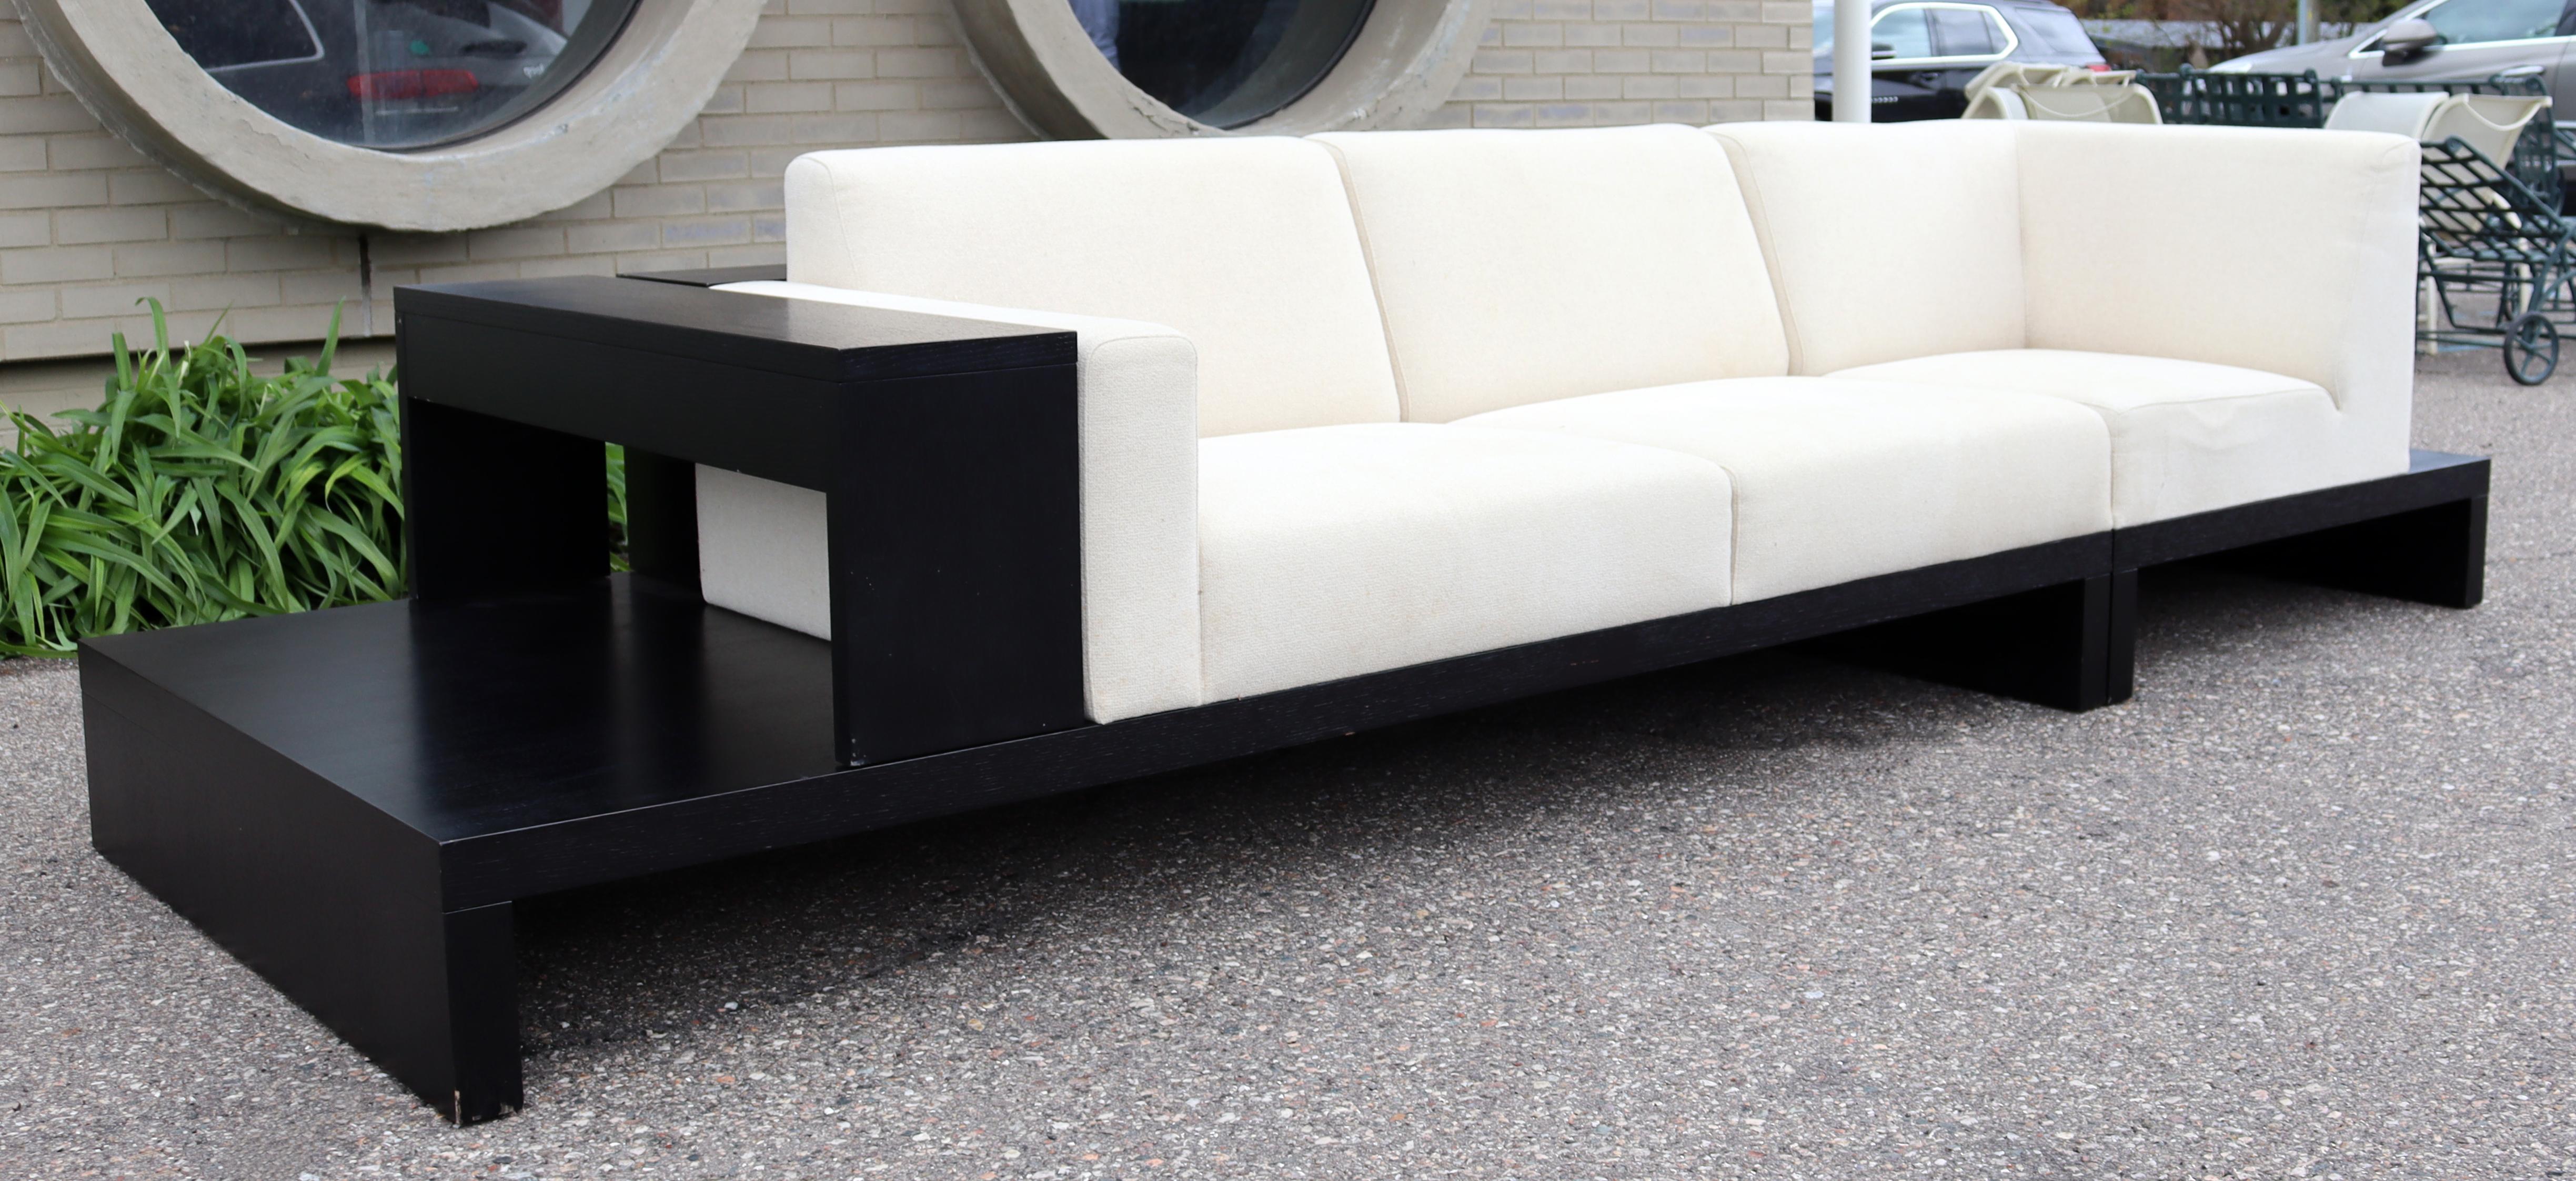 20th Century Contemporary Modernist Cream Sofa on Platform with Shelving